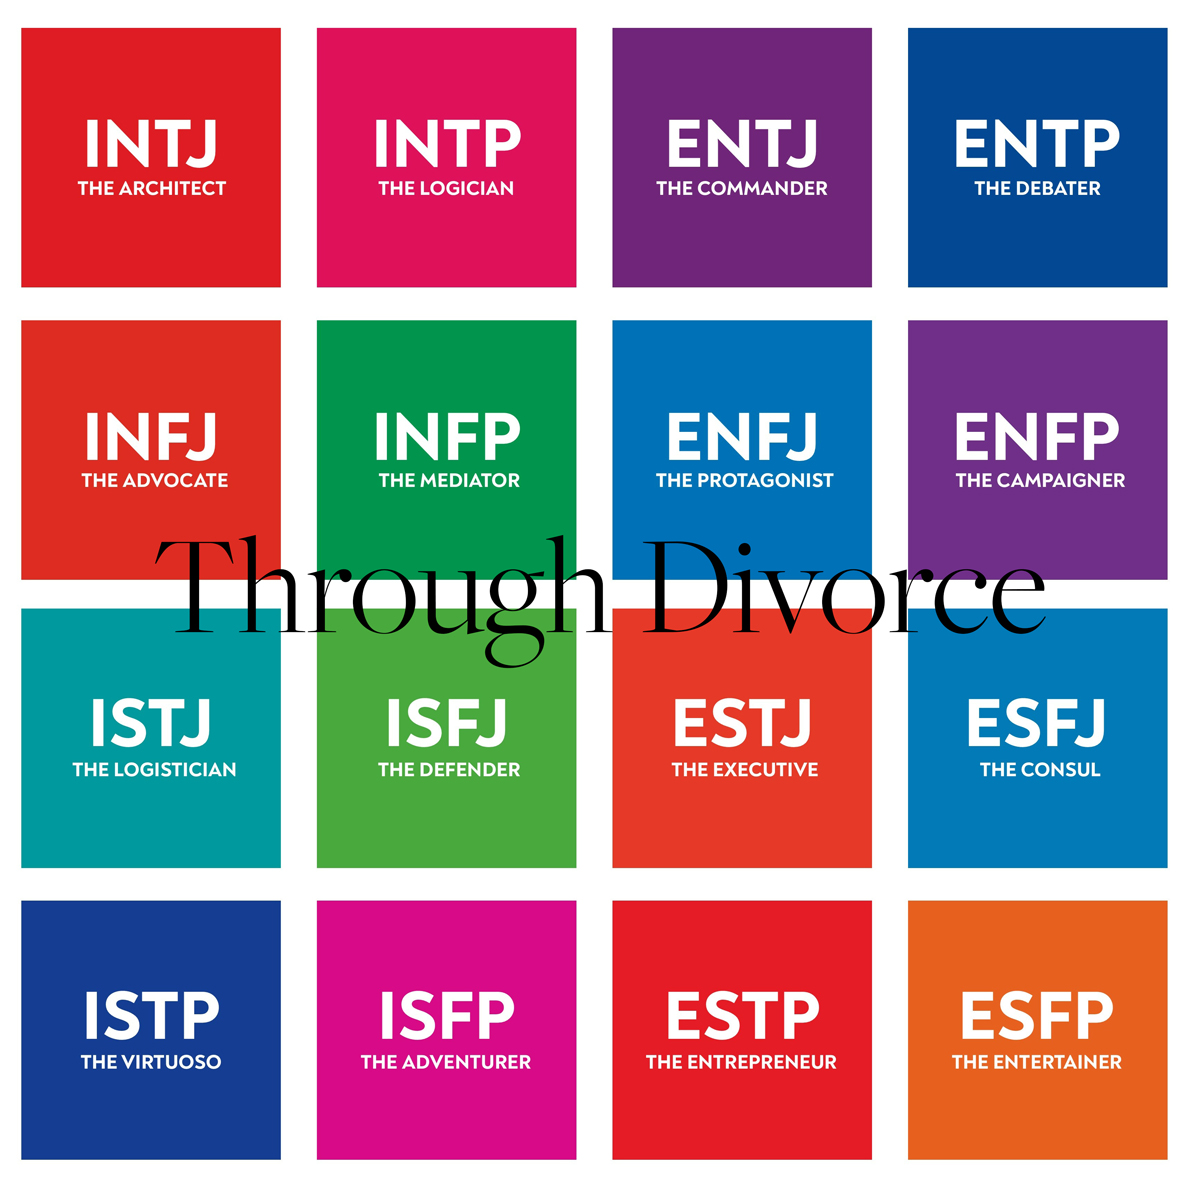 Ari MBTI Personality Type: ESFJ or ESFP?